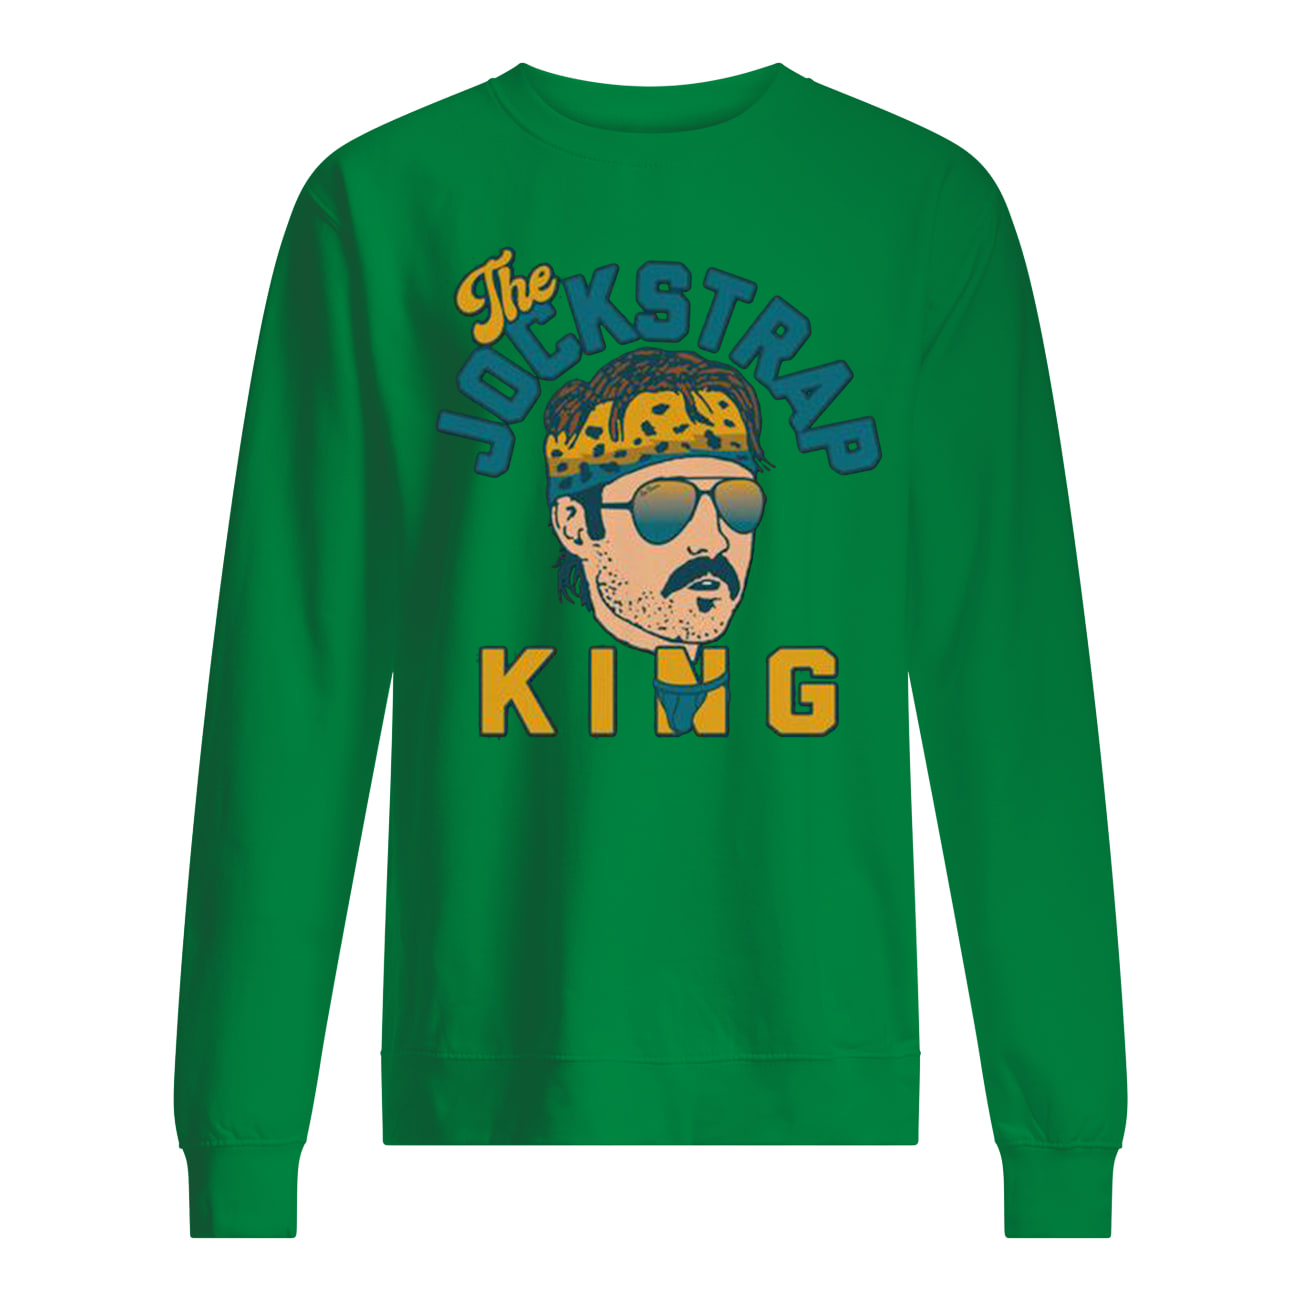 Gardner minshew the jockstrap king jacksonville jaguars inspired sweatshirt